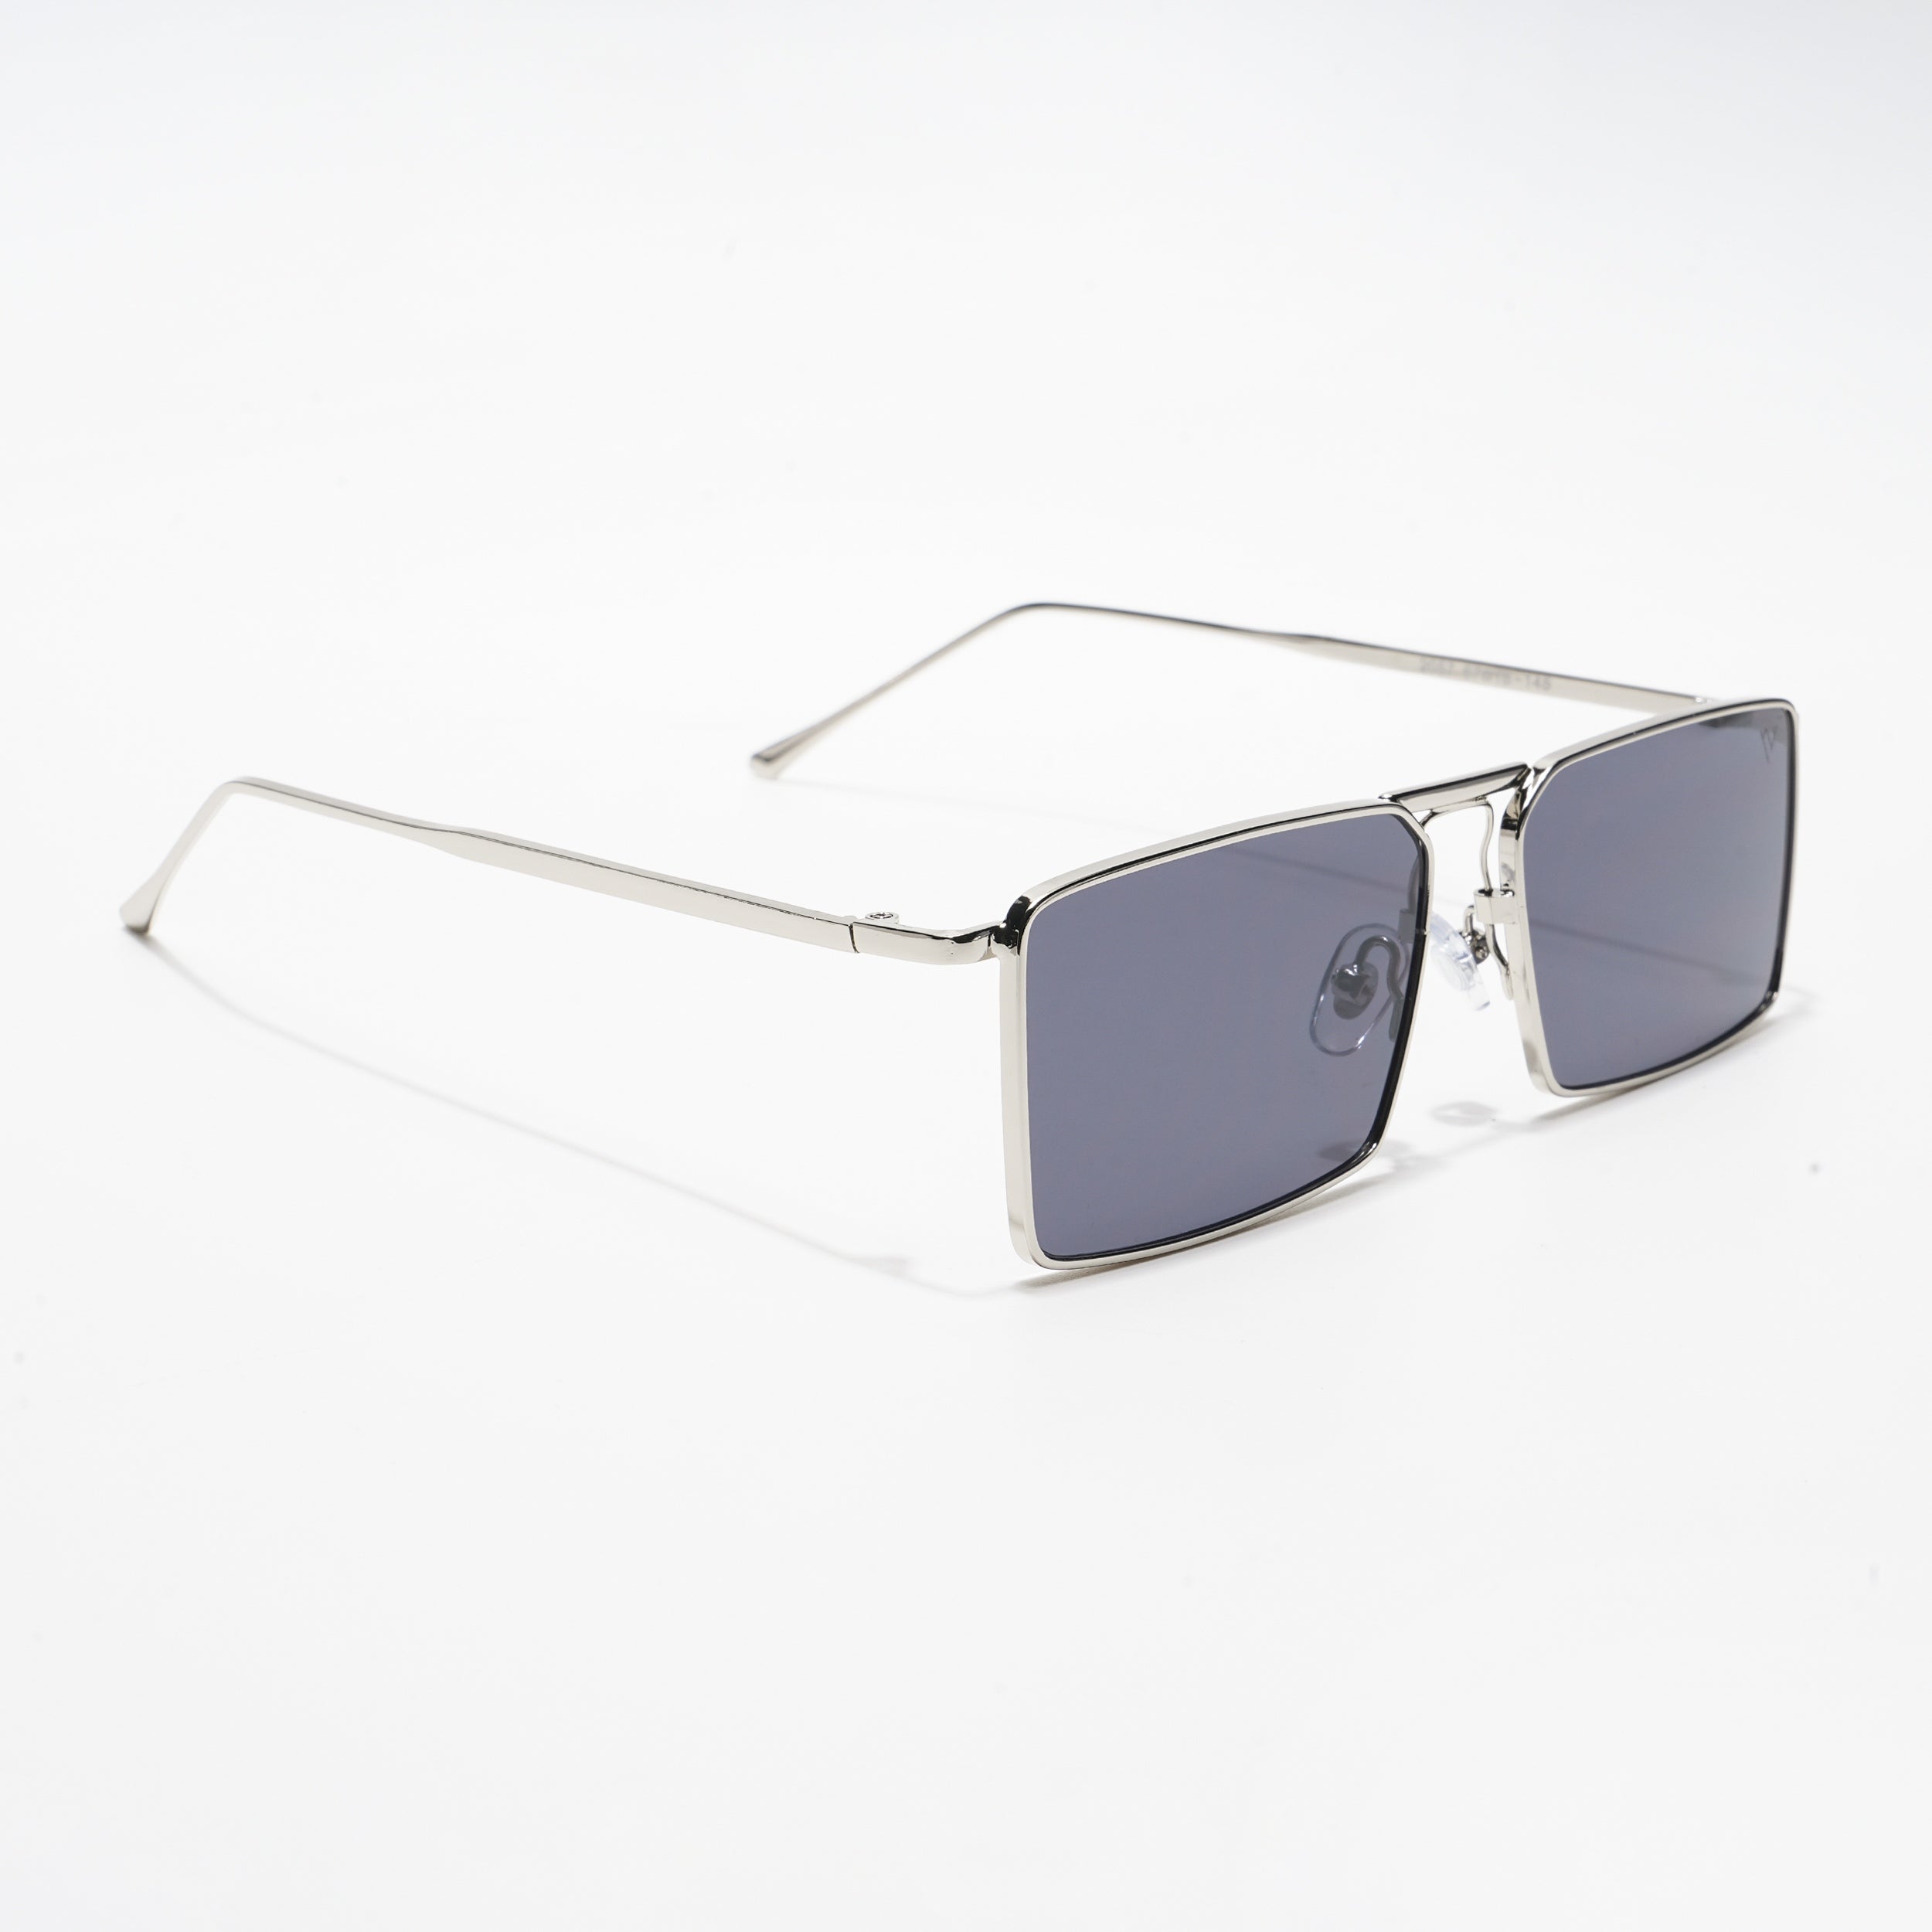 Voyage Silver Digger | Black & Silver Rectangular Sunglasses - MG3573